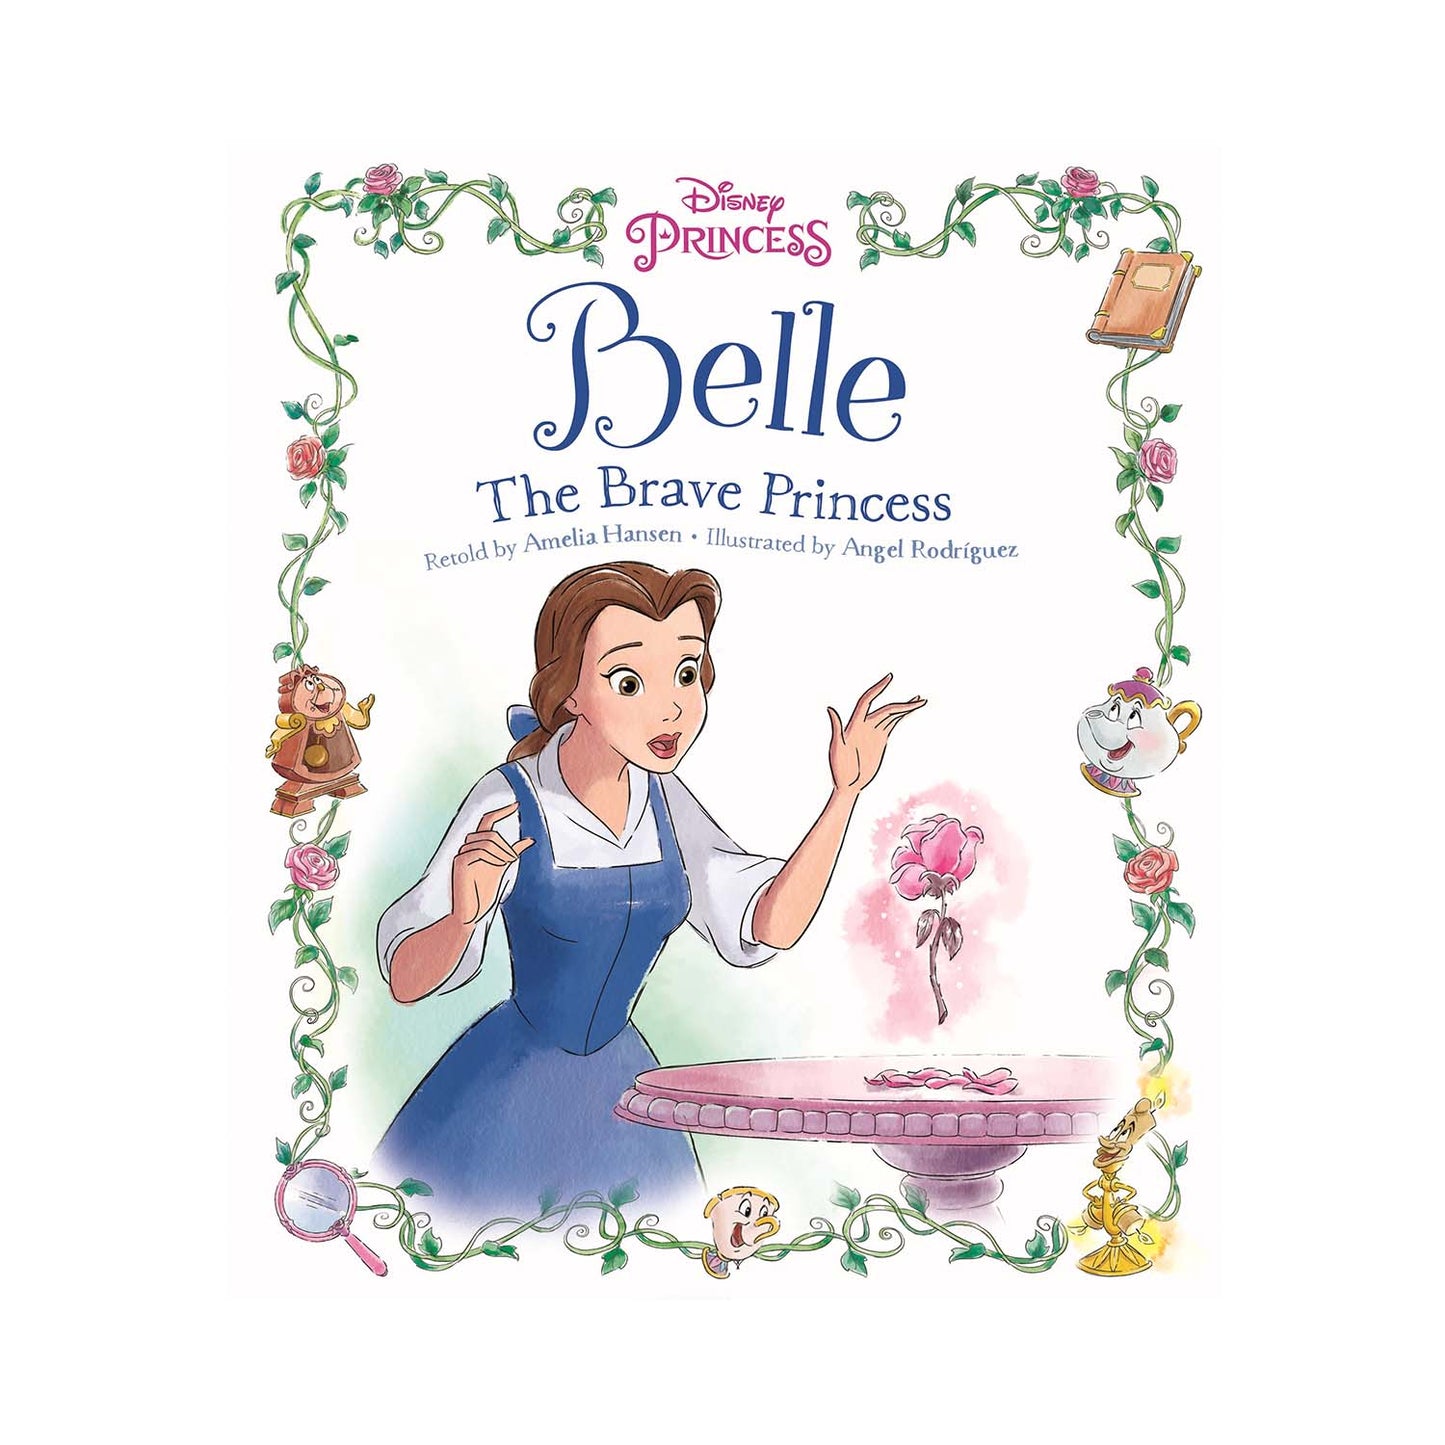 Disney Princess Beauty and the Beast: Belle The Brave Princess (Picture Bk Pb Disney) Parragon